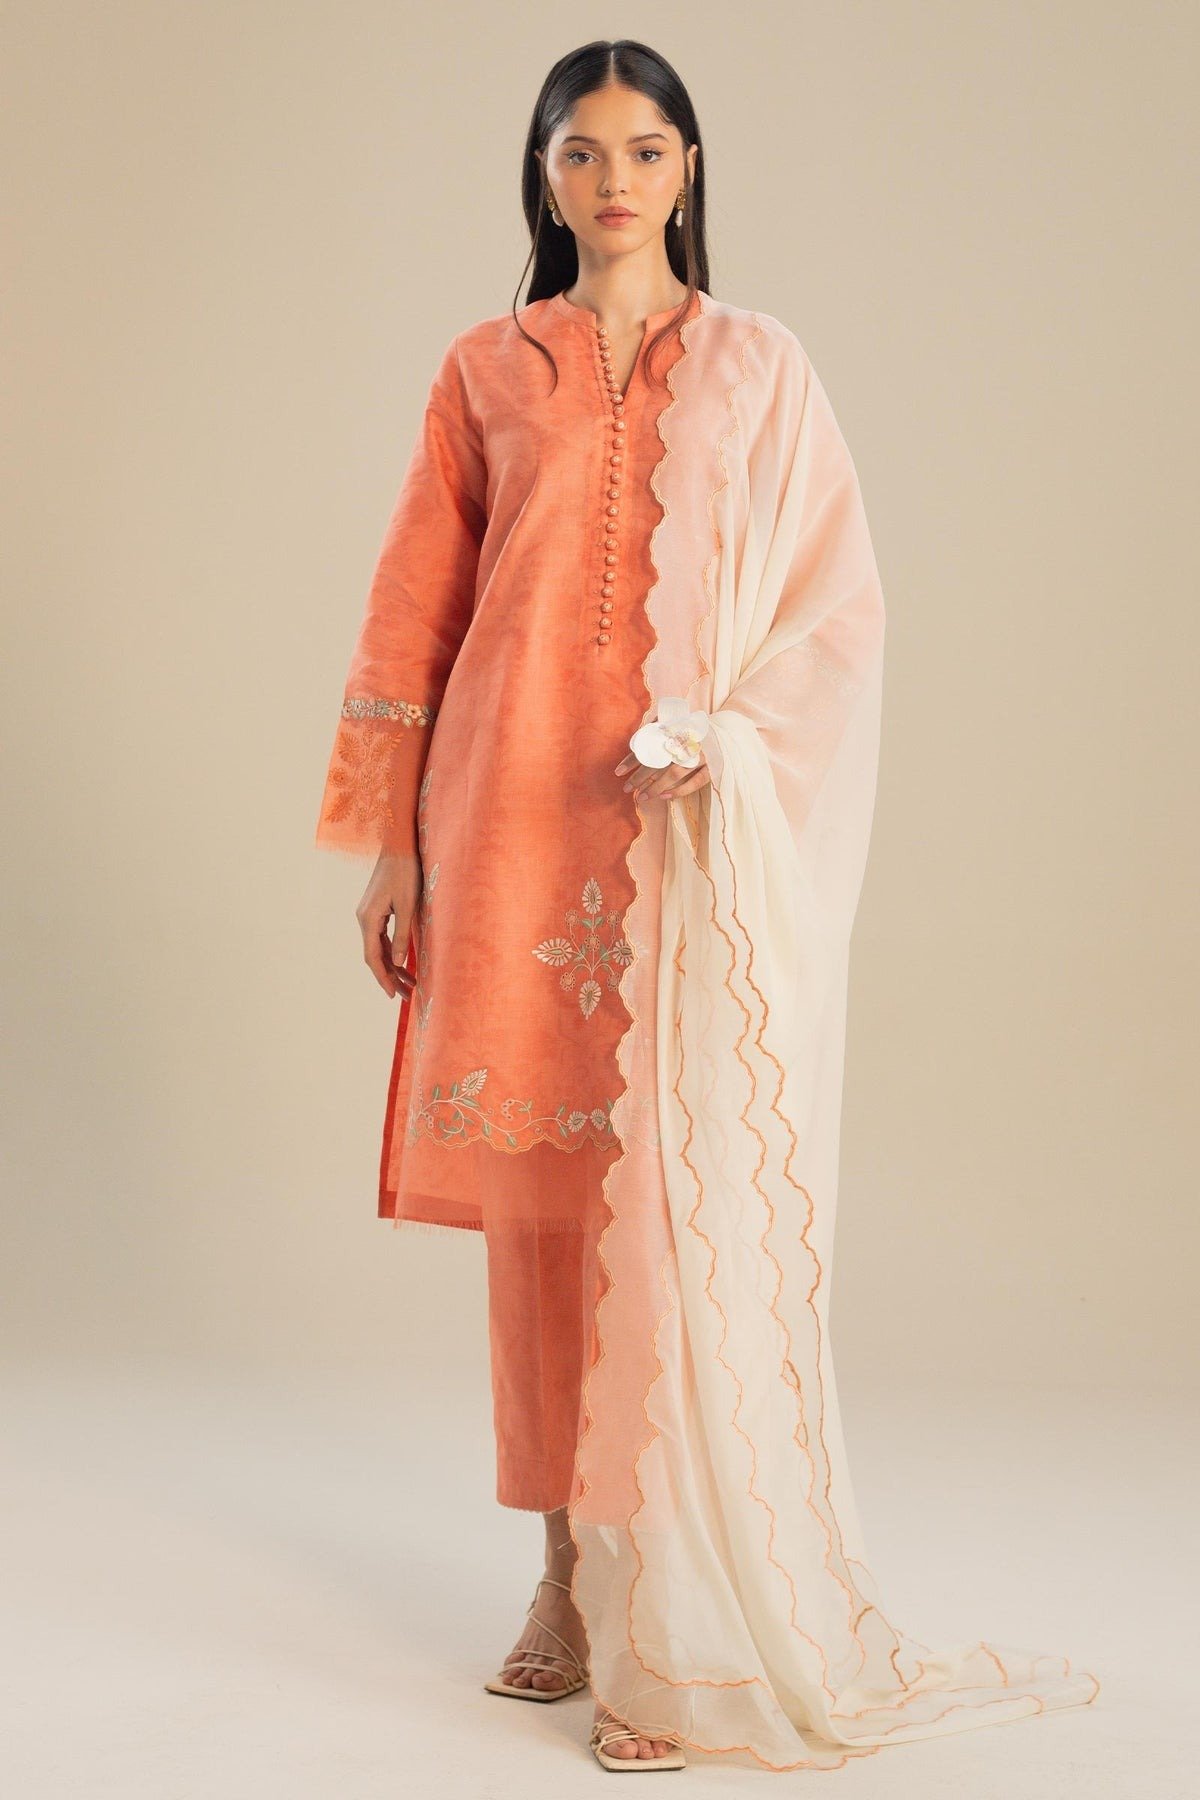 Zara Shah Jahan women new dress design empires collection luxury lawn summer suit pakistan clothing fashion